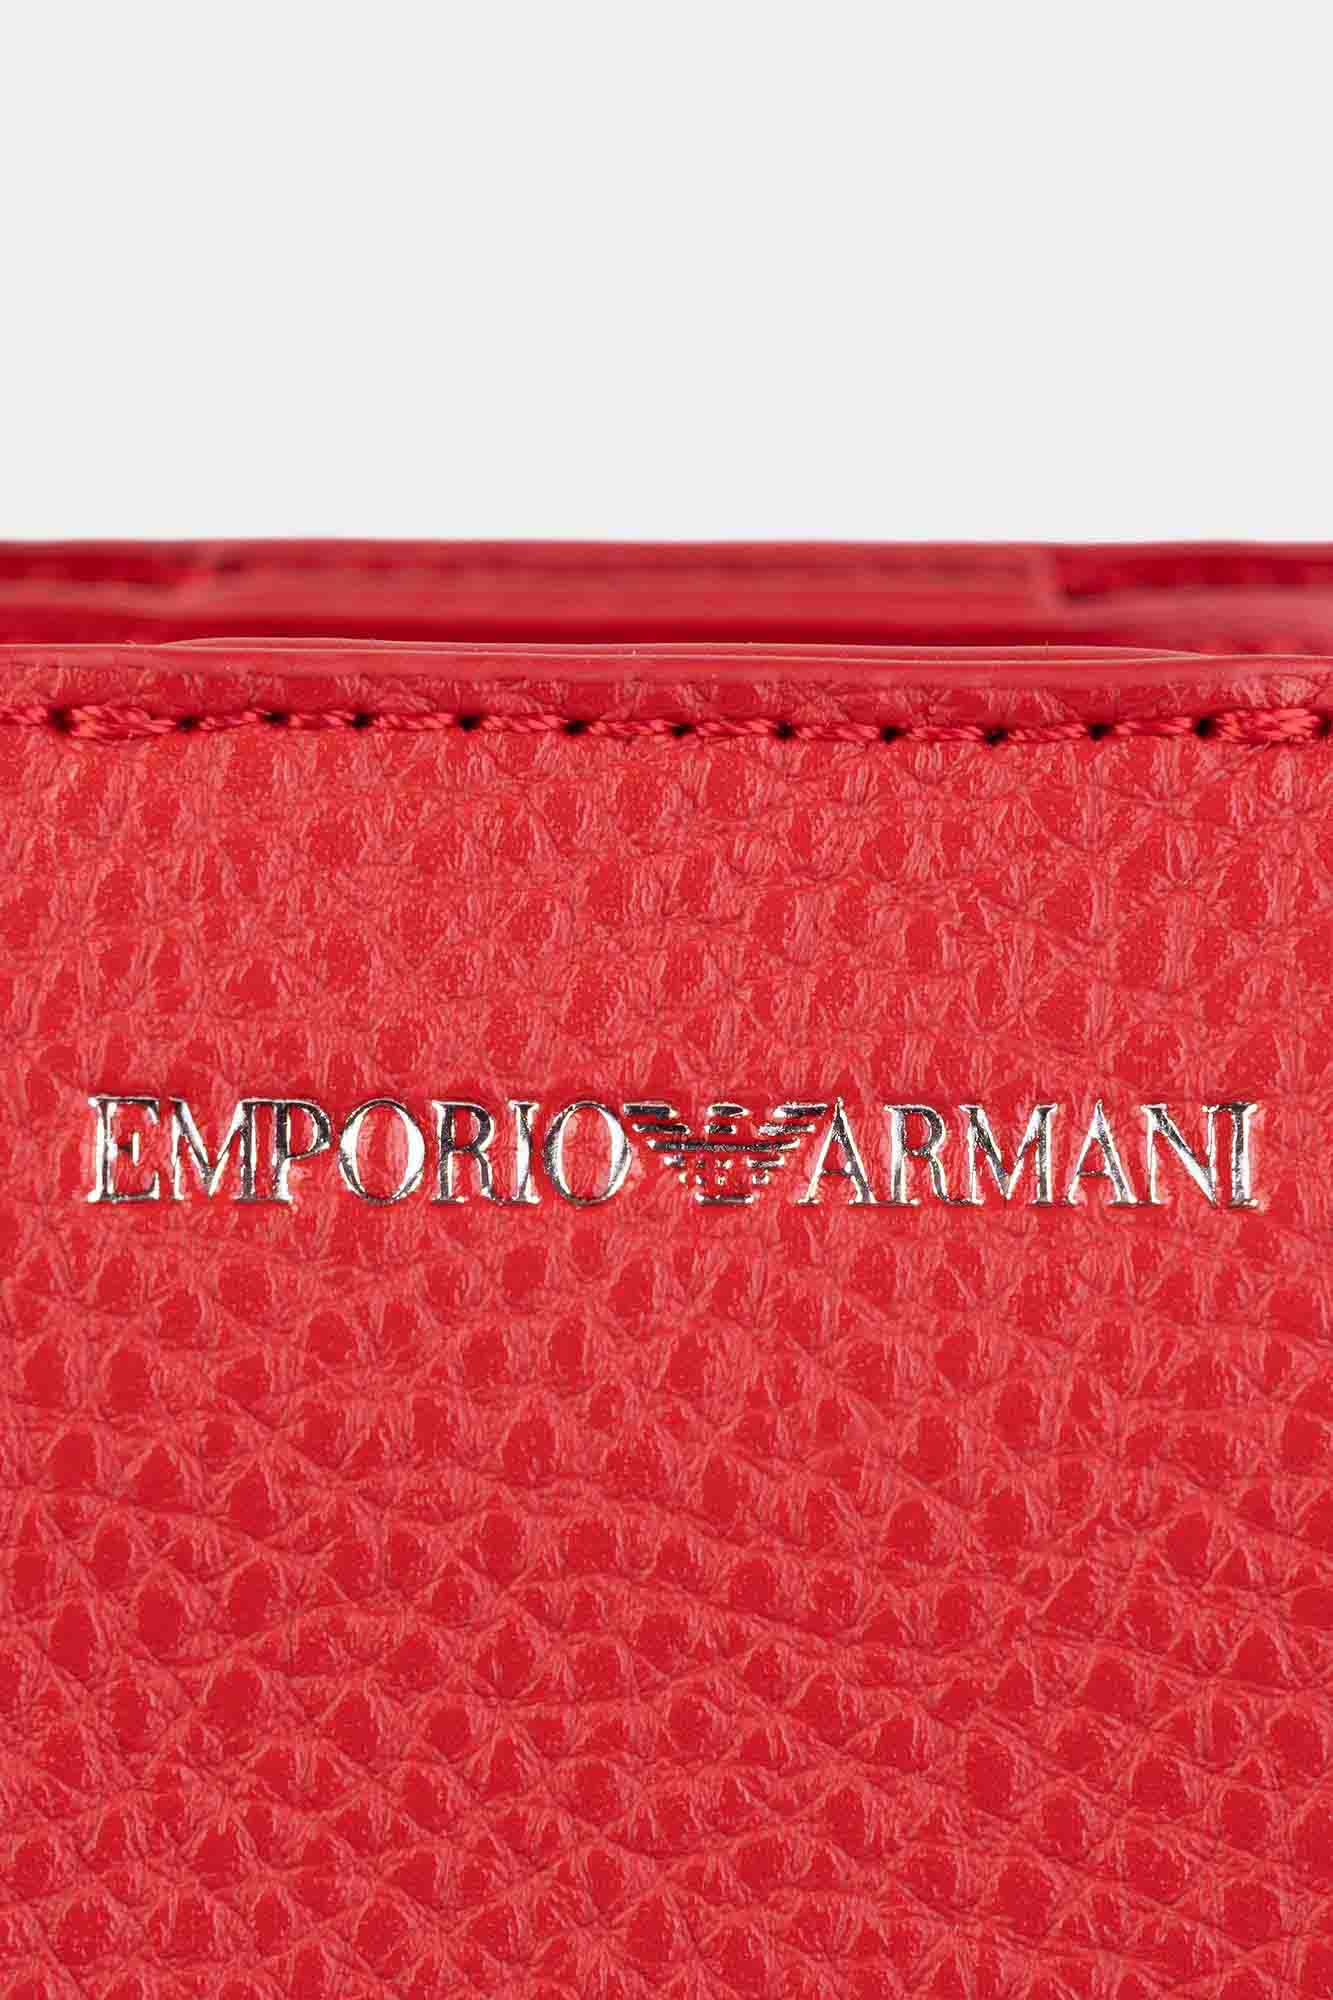  Emporio Armani torebka Women's Tote Bag czerwona